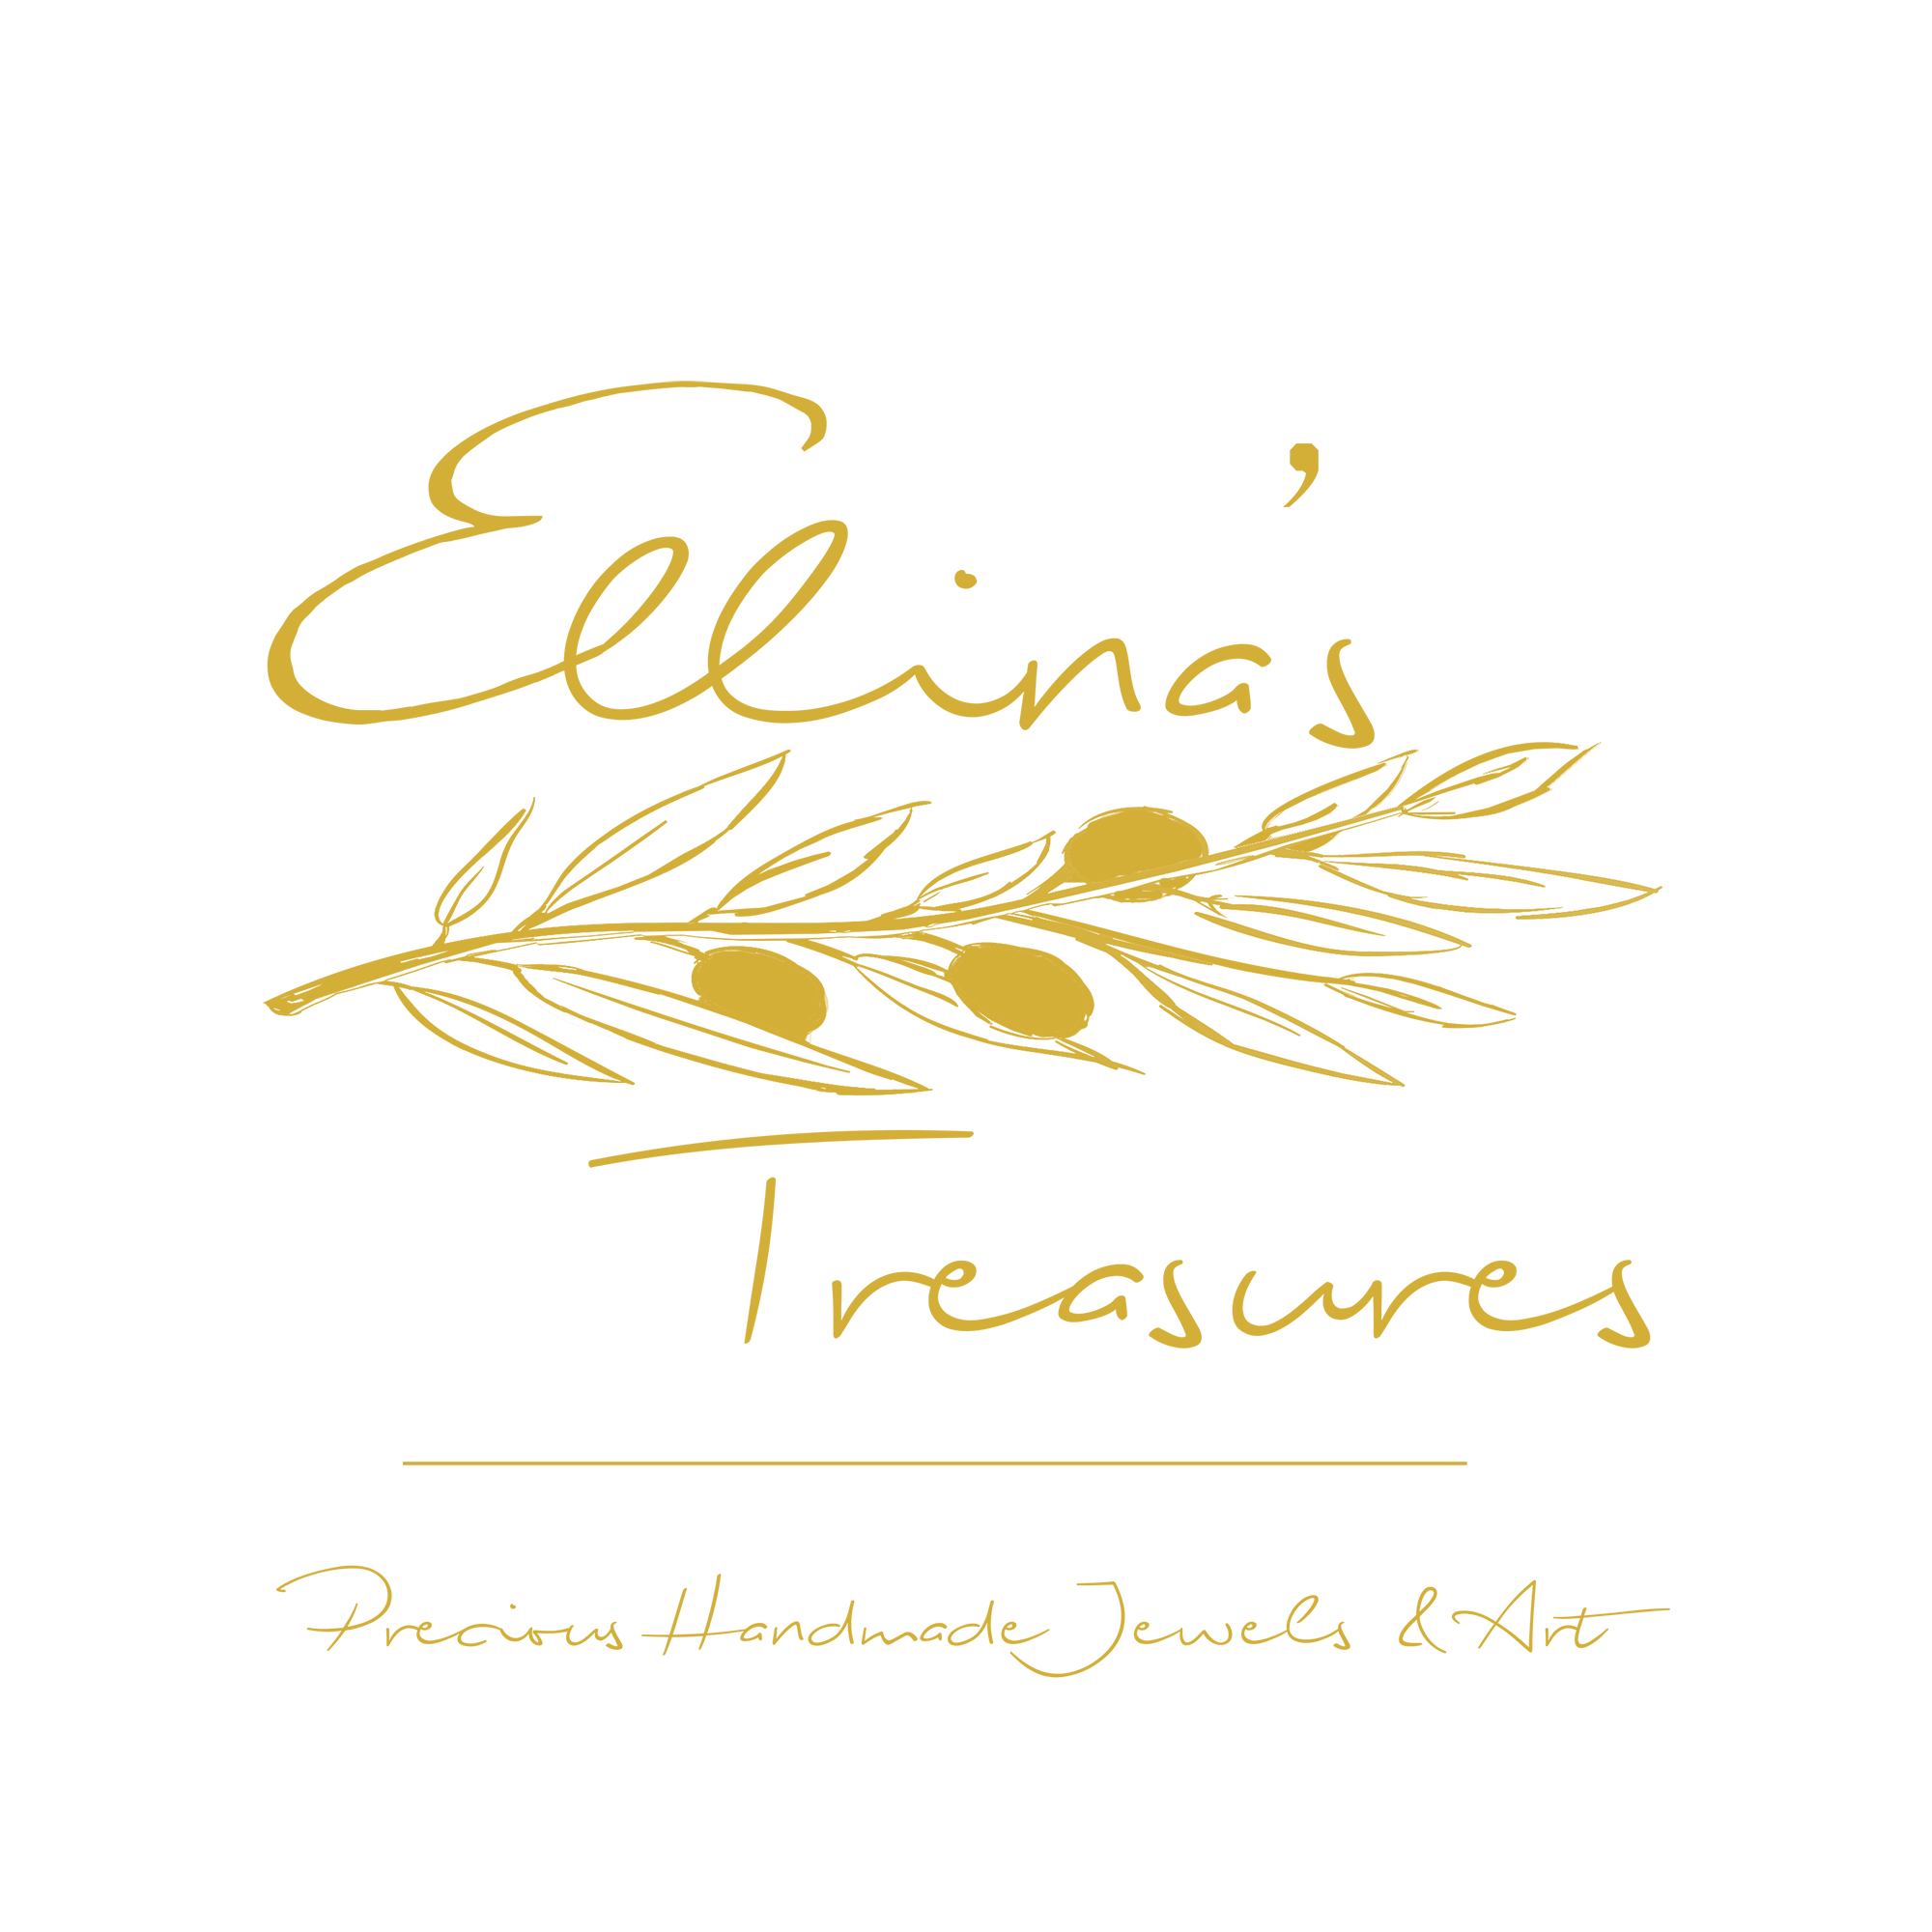 Ellina's Treasures